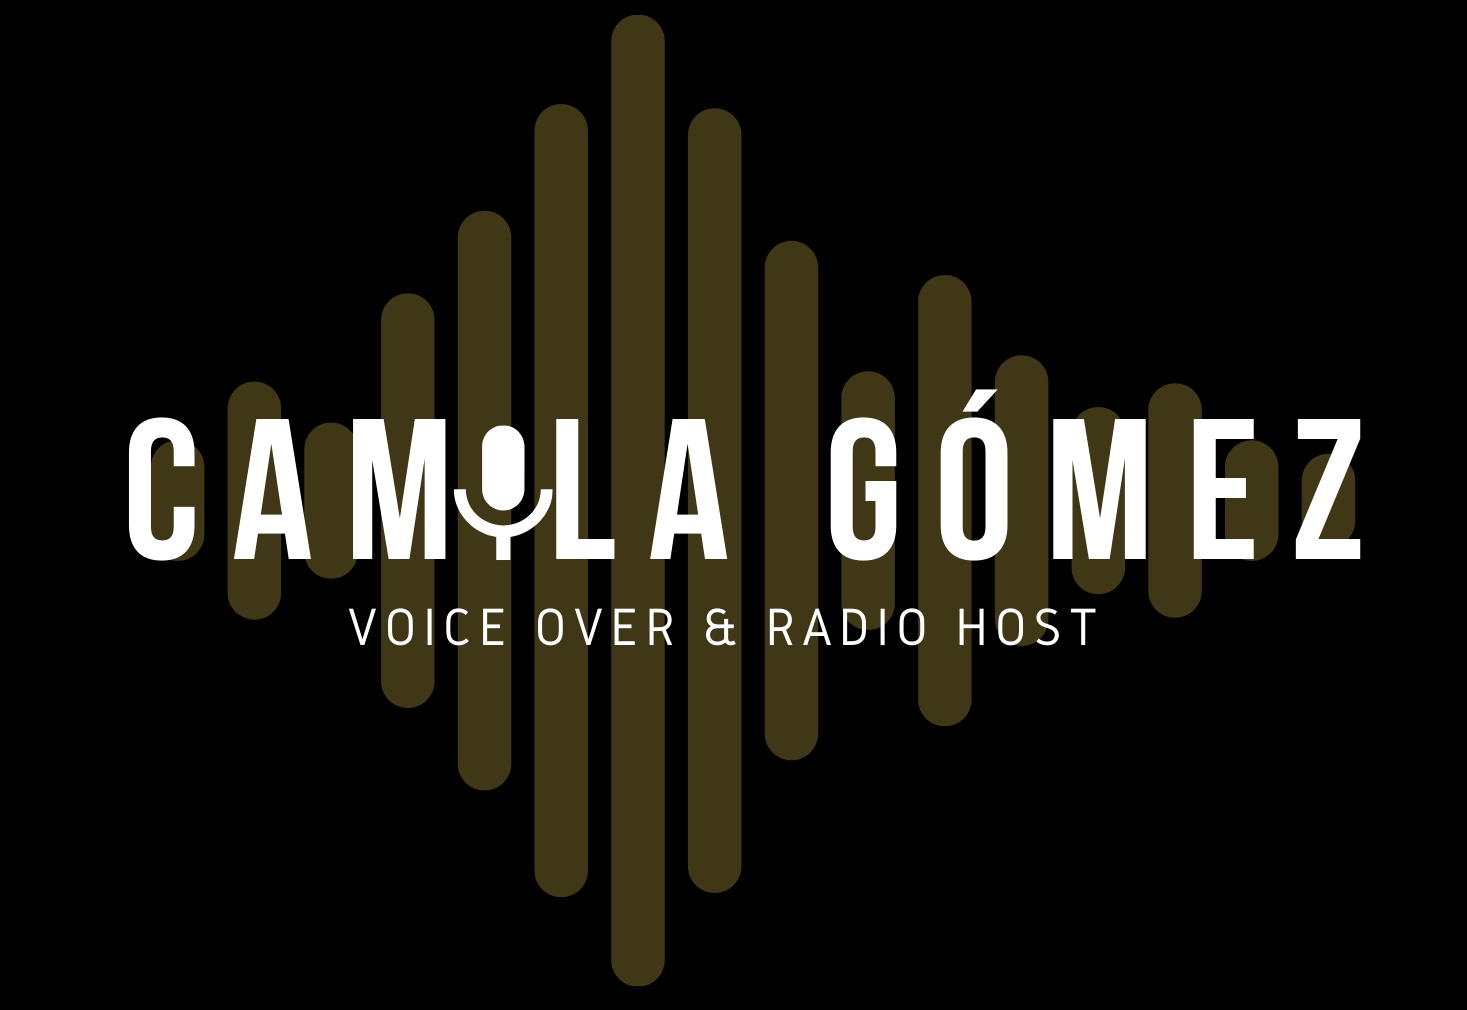 Camila Gomez Voice